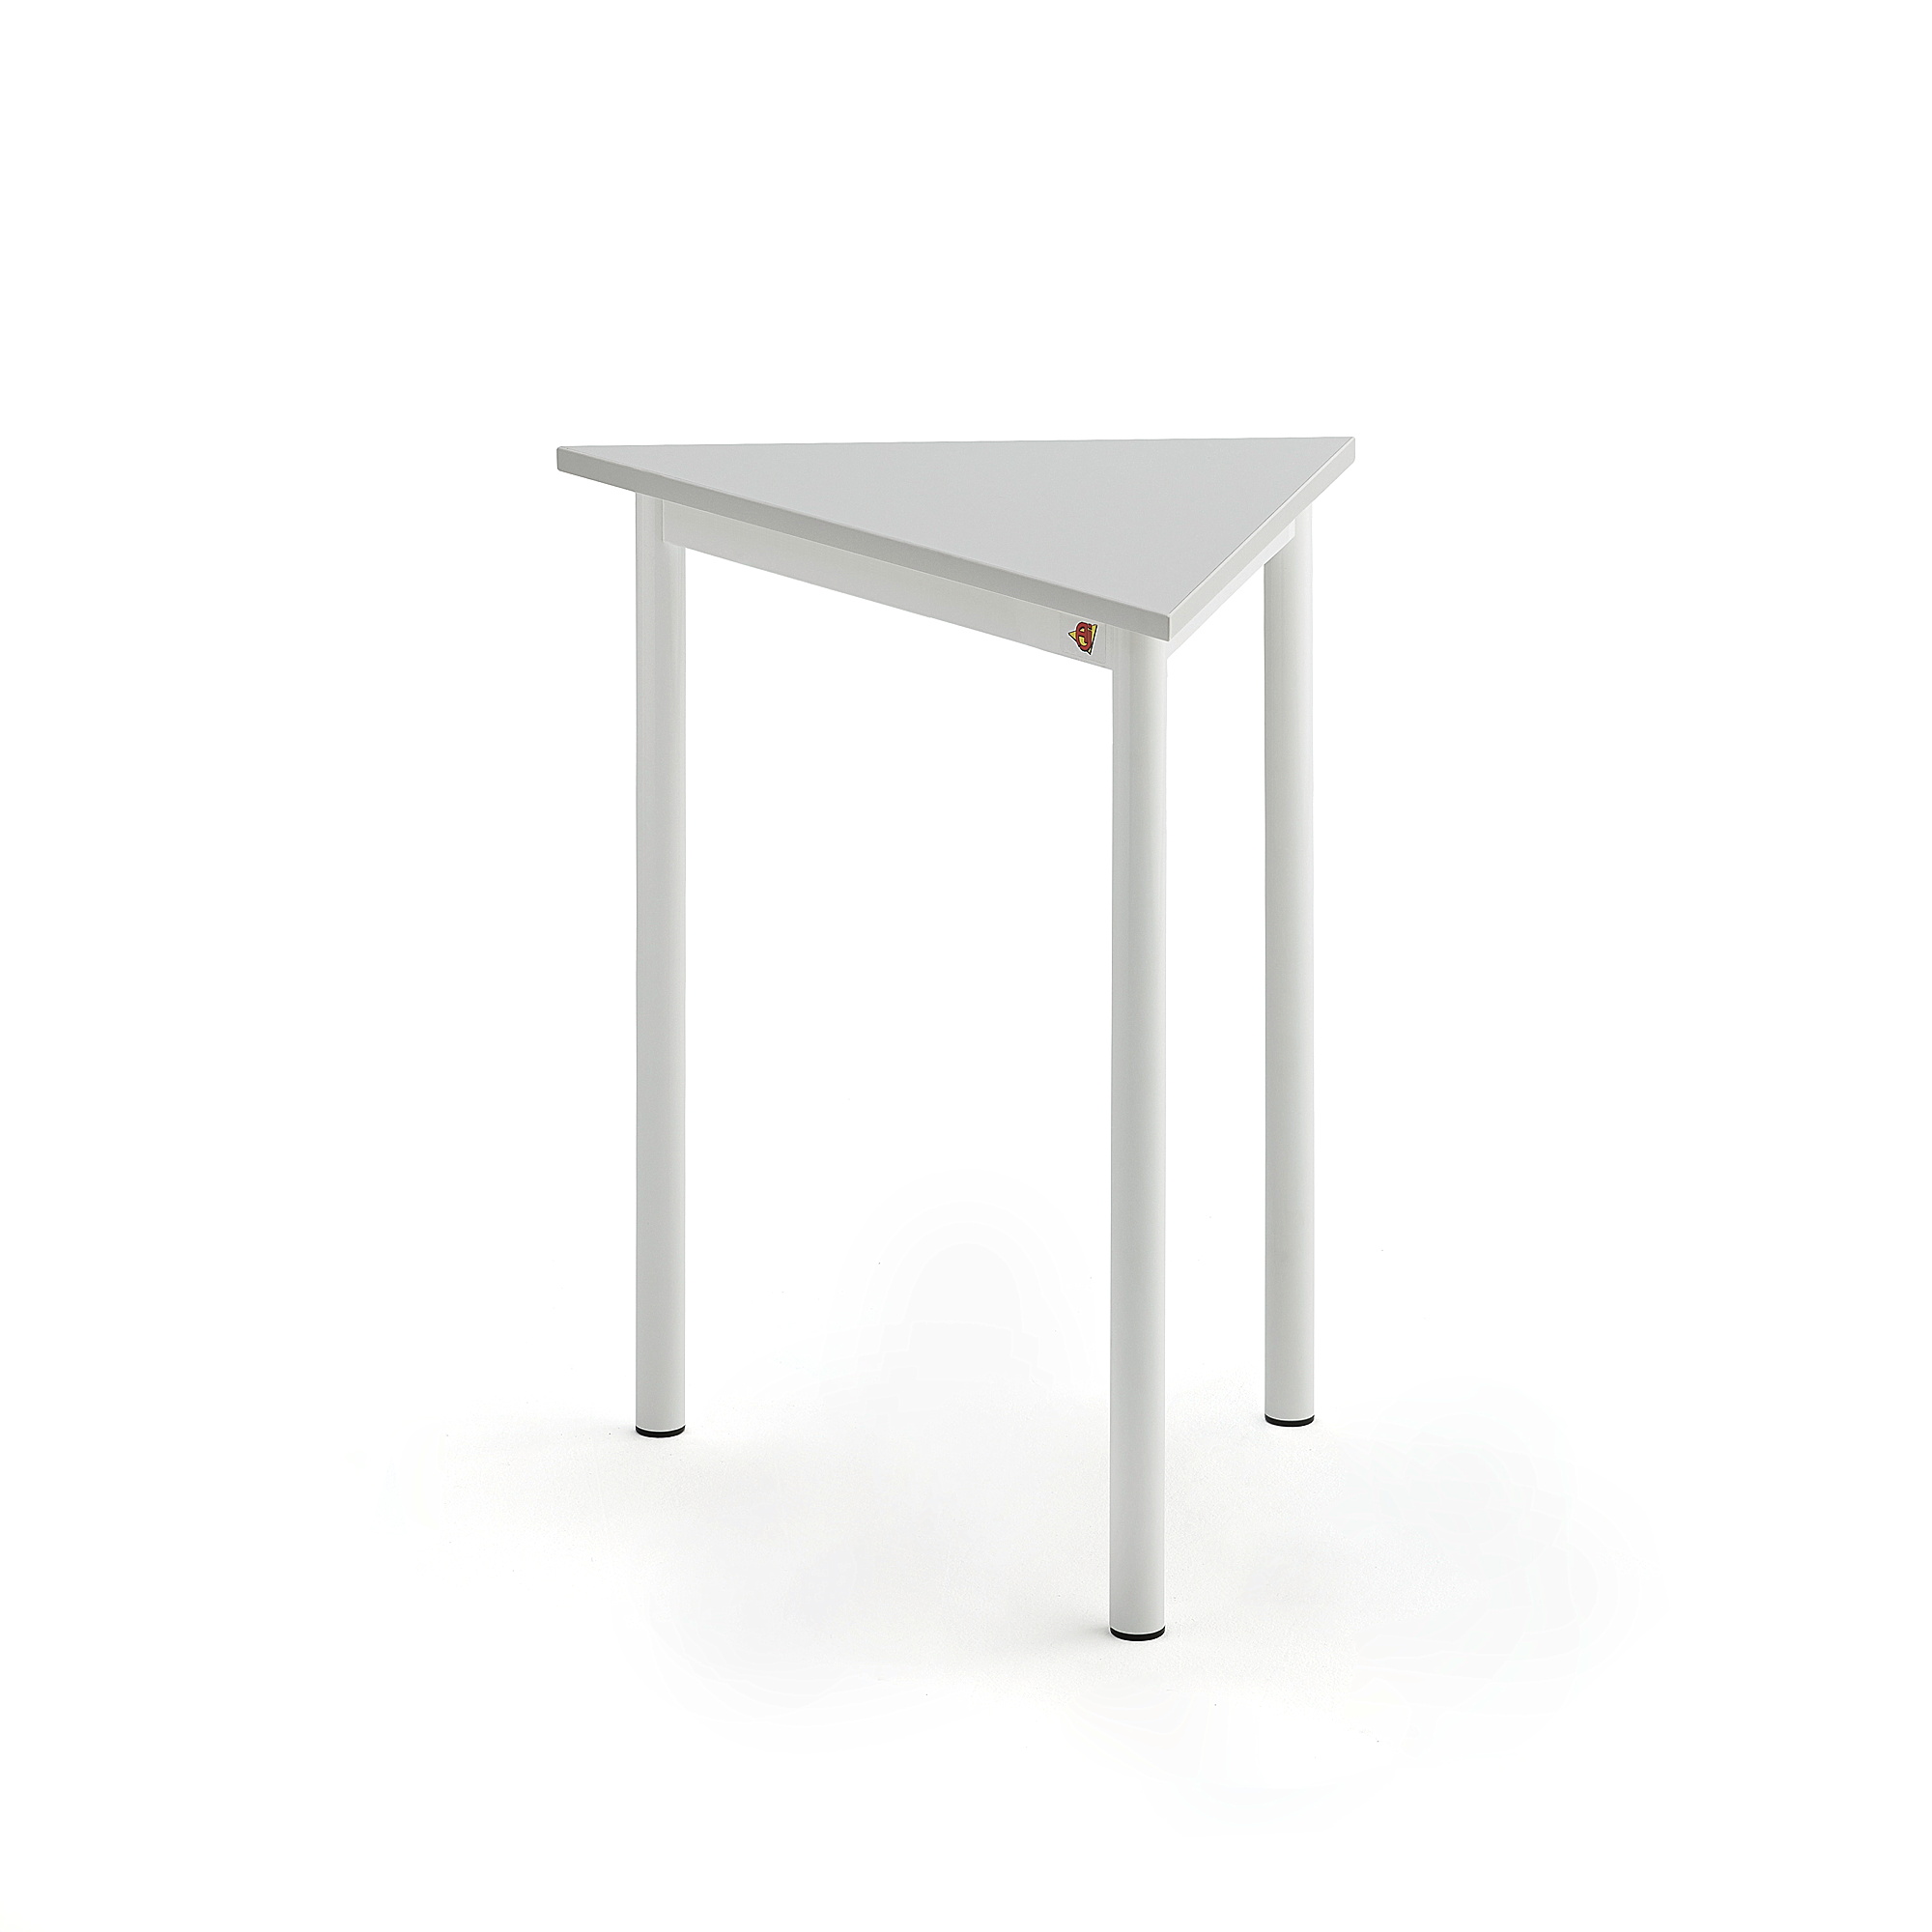 Stůl SONITUS TRIANGEL, 700x600x720 mm, bílé nohy, HPL deska tlumící hluk, šedá